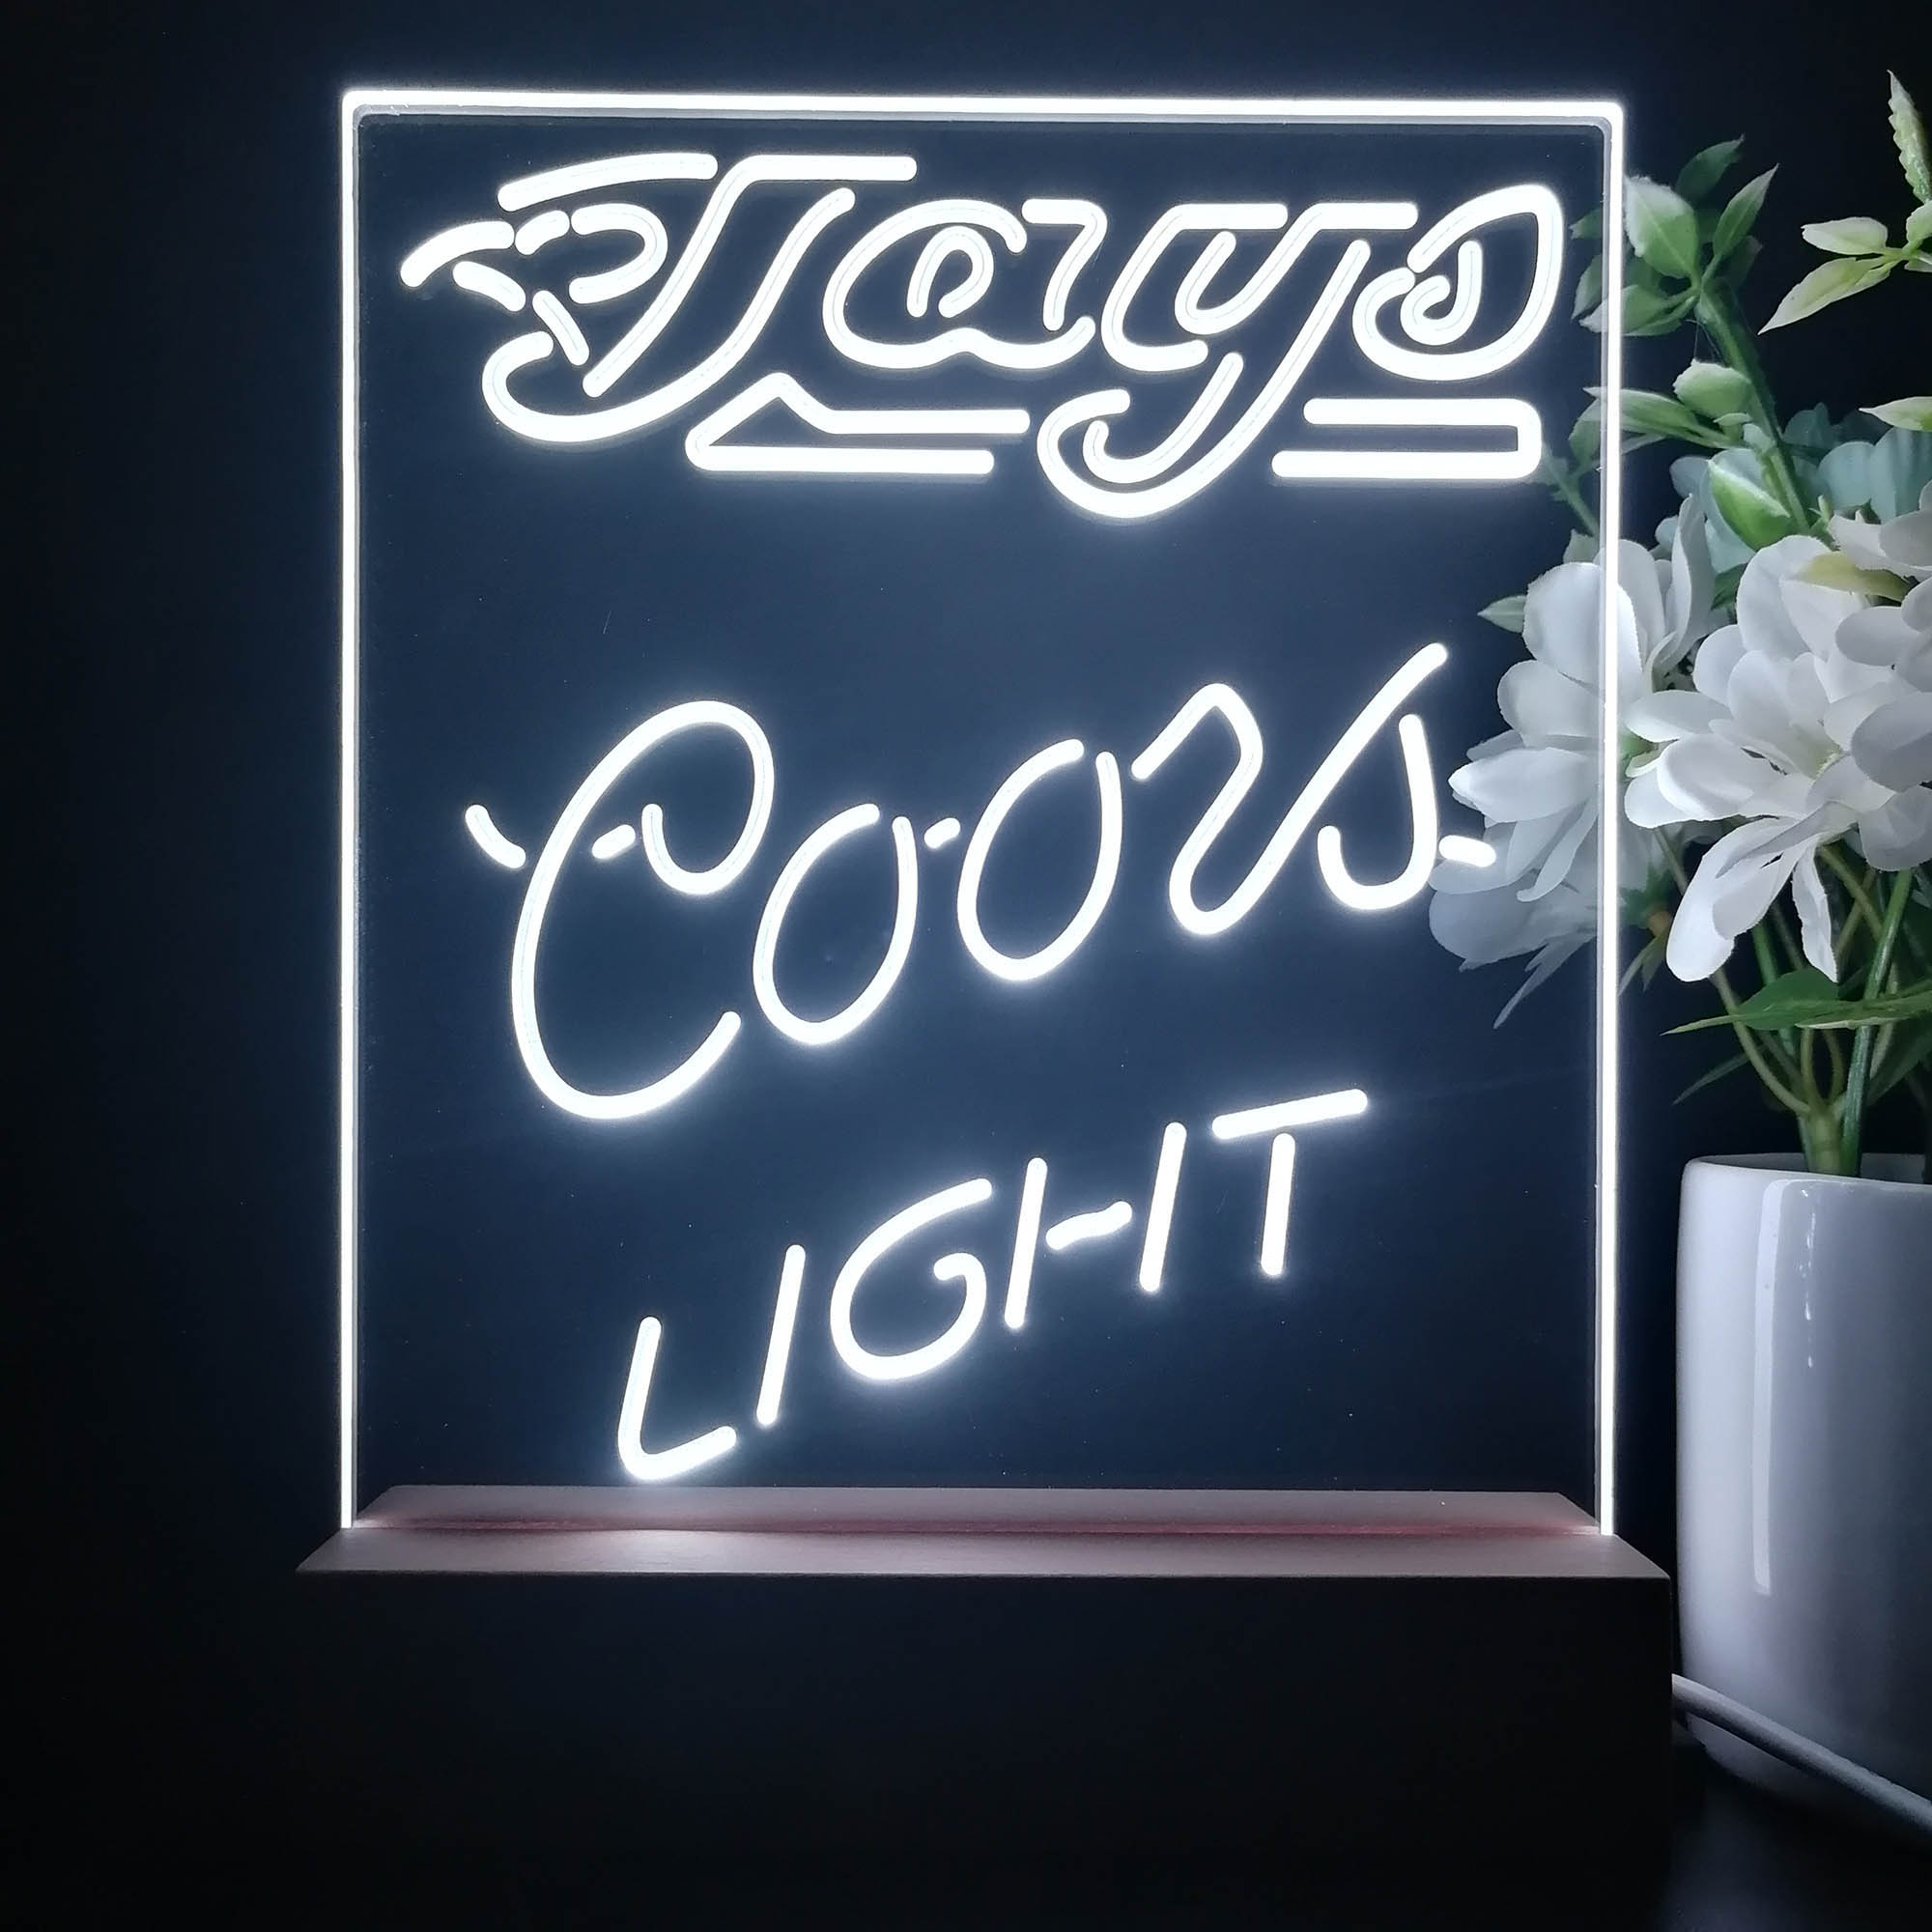 Toronto Blue Jays Coors Light Neon Sign Pub Bar Lamp